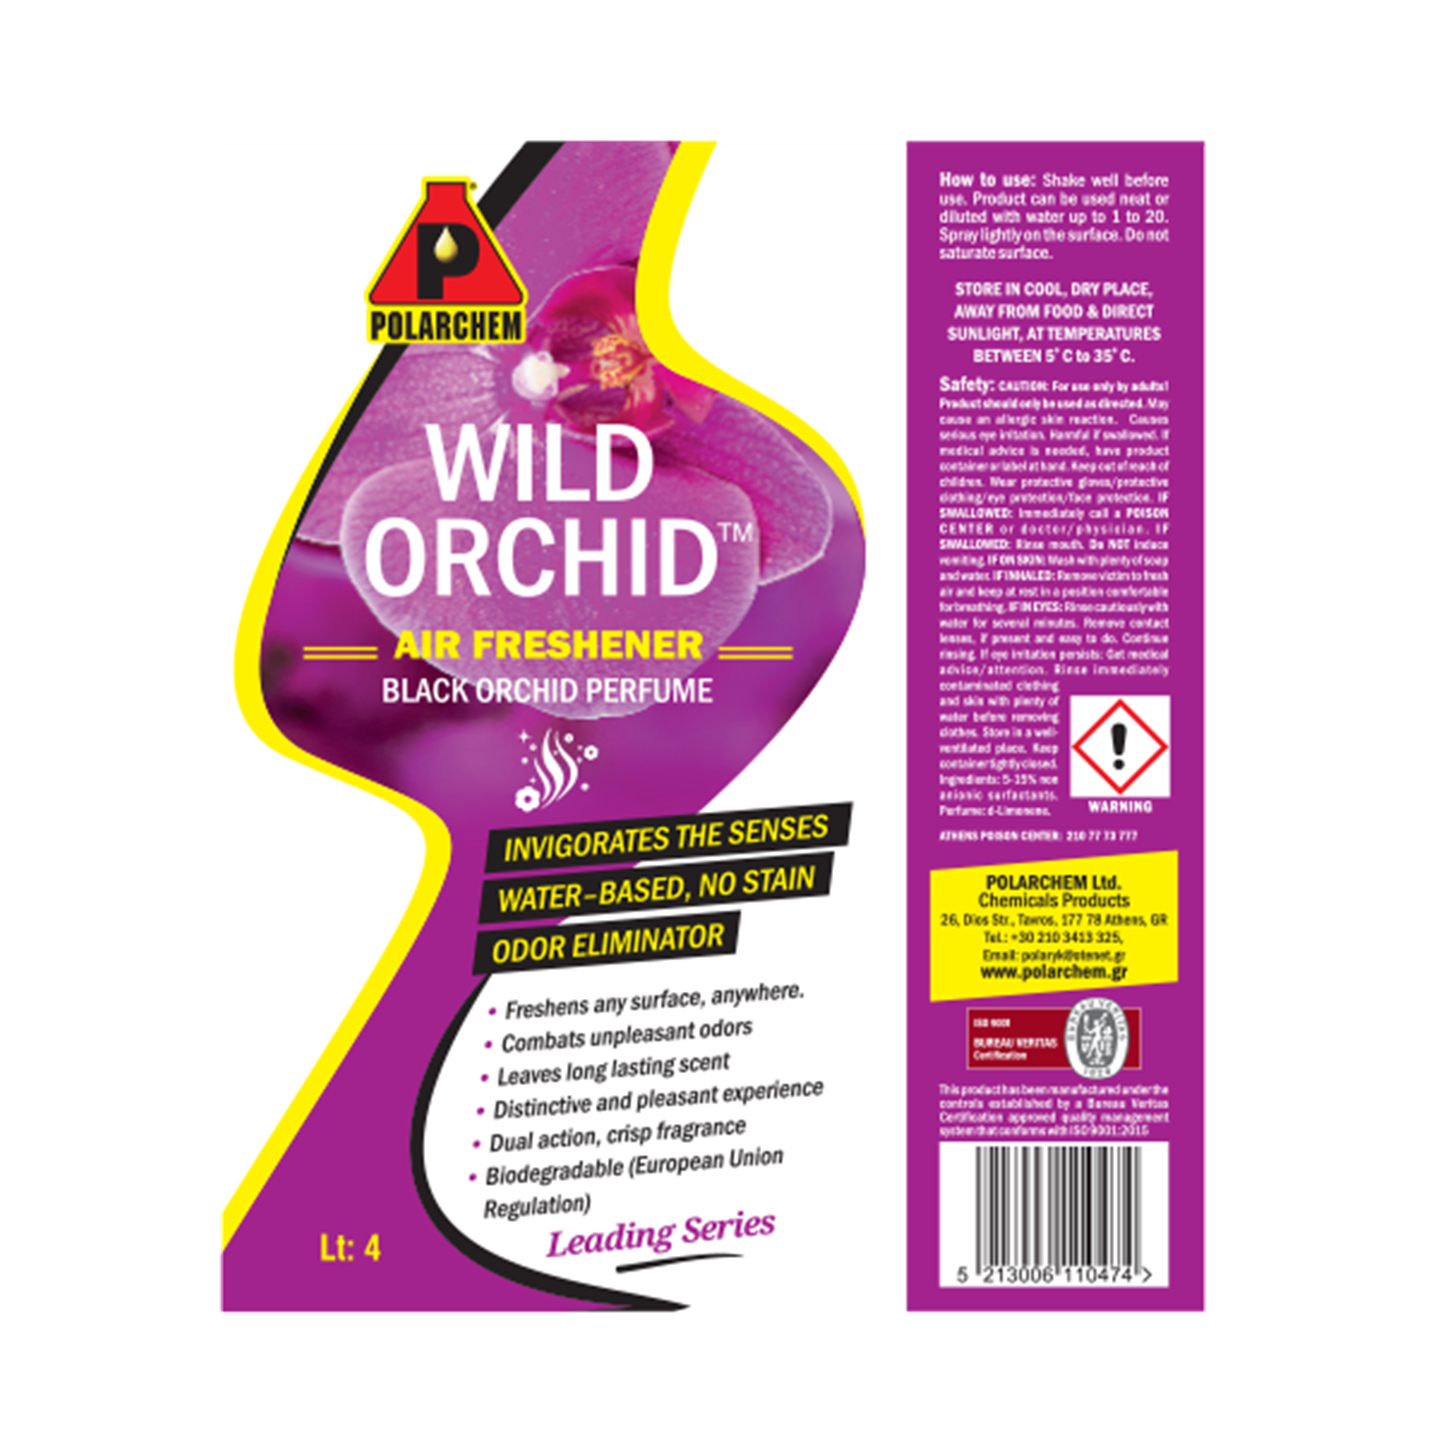 WILD ORCHID Air freshener